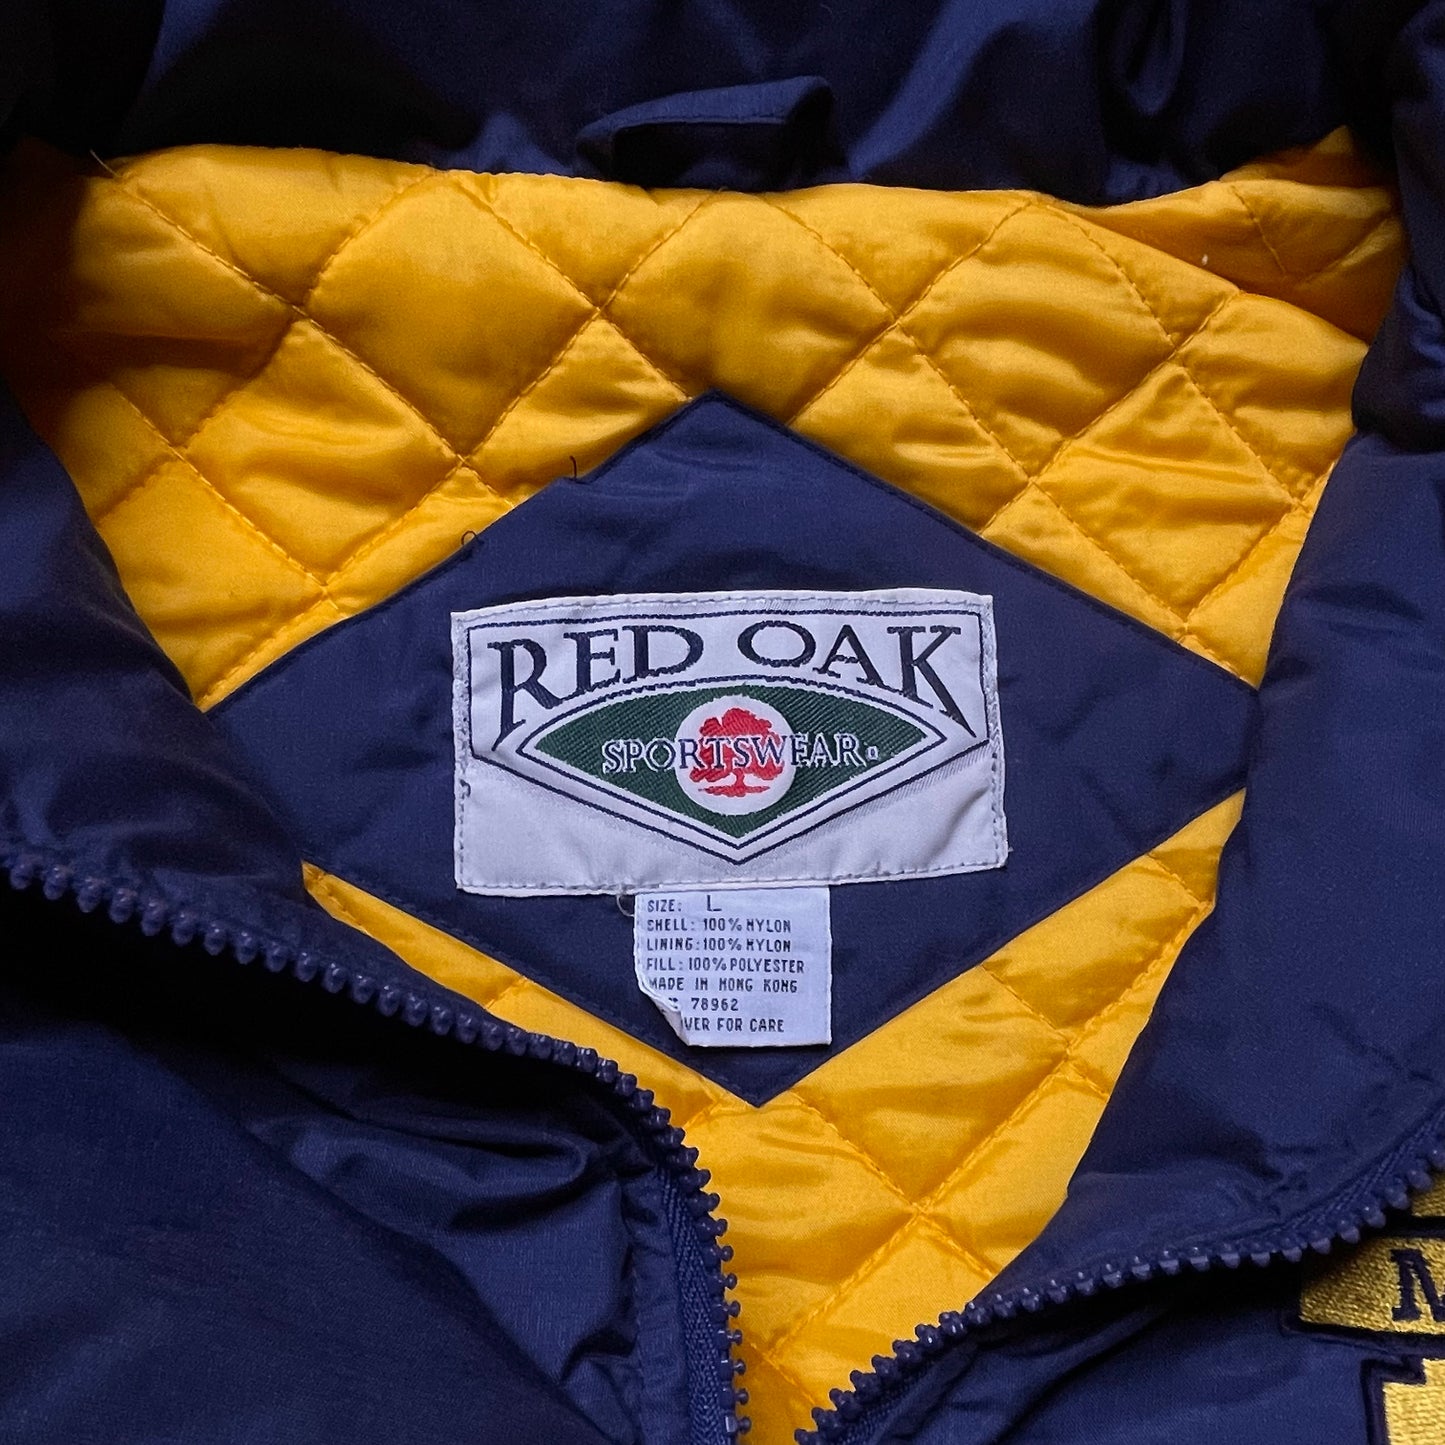 Vintage Michigan University Puffer Jacket  (L)